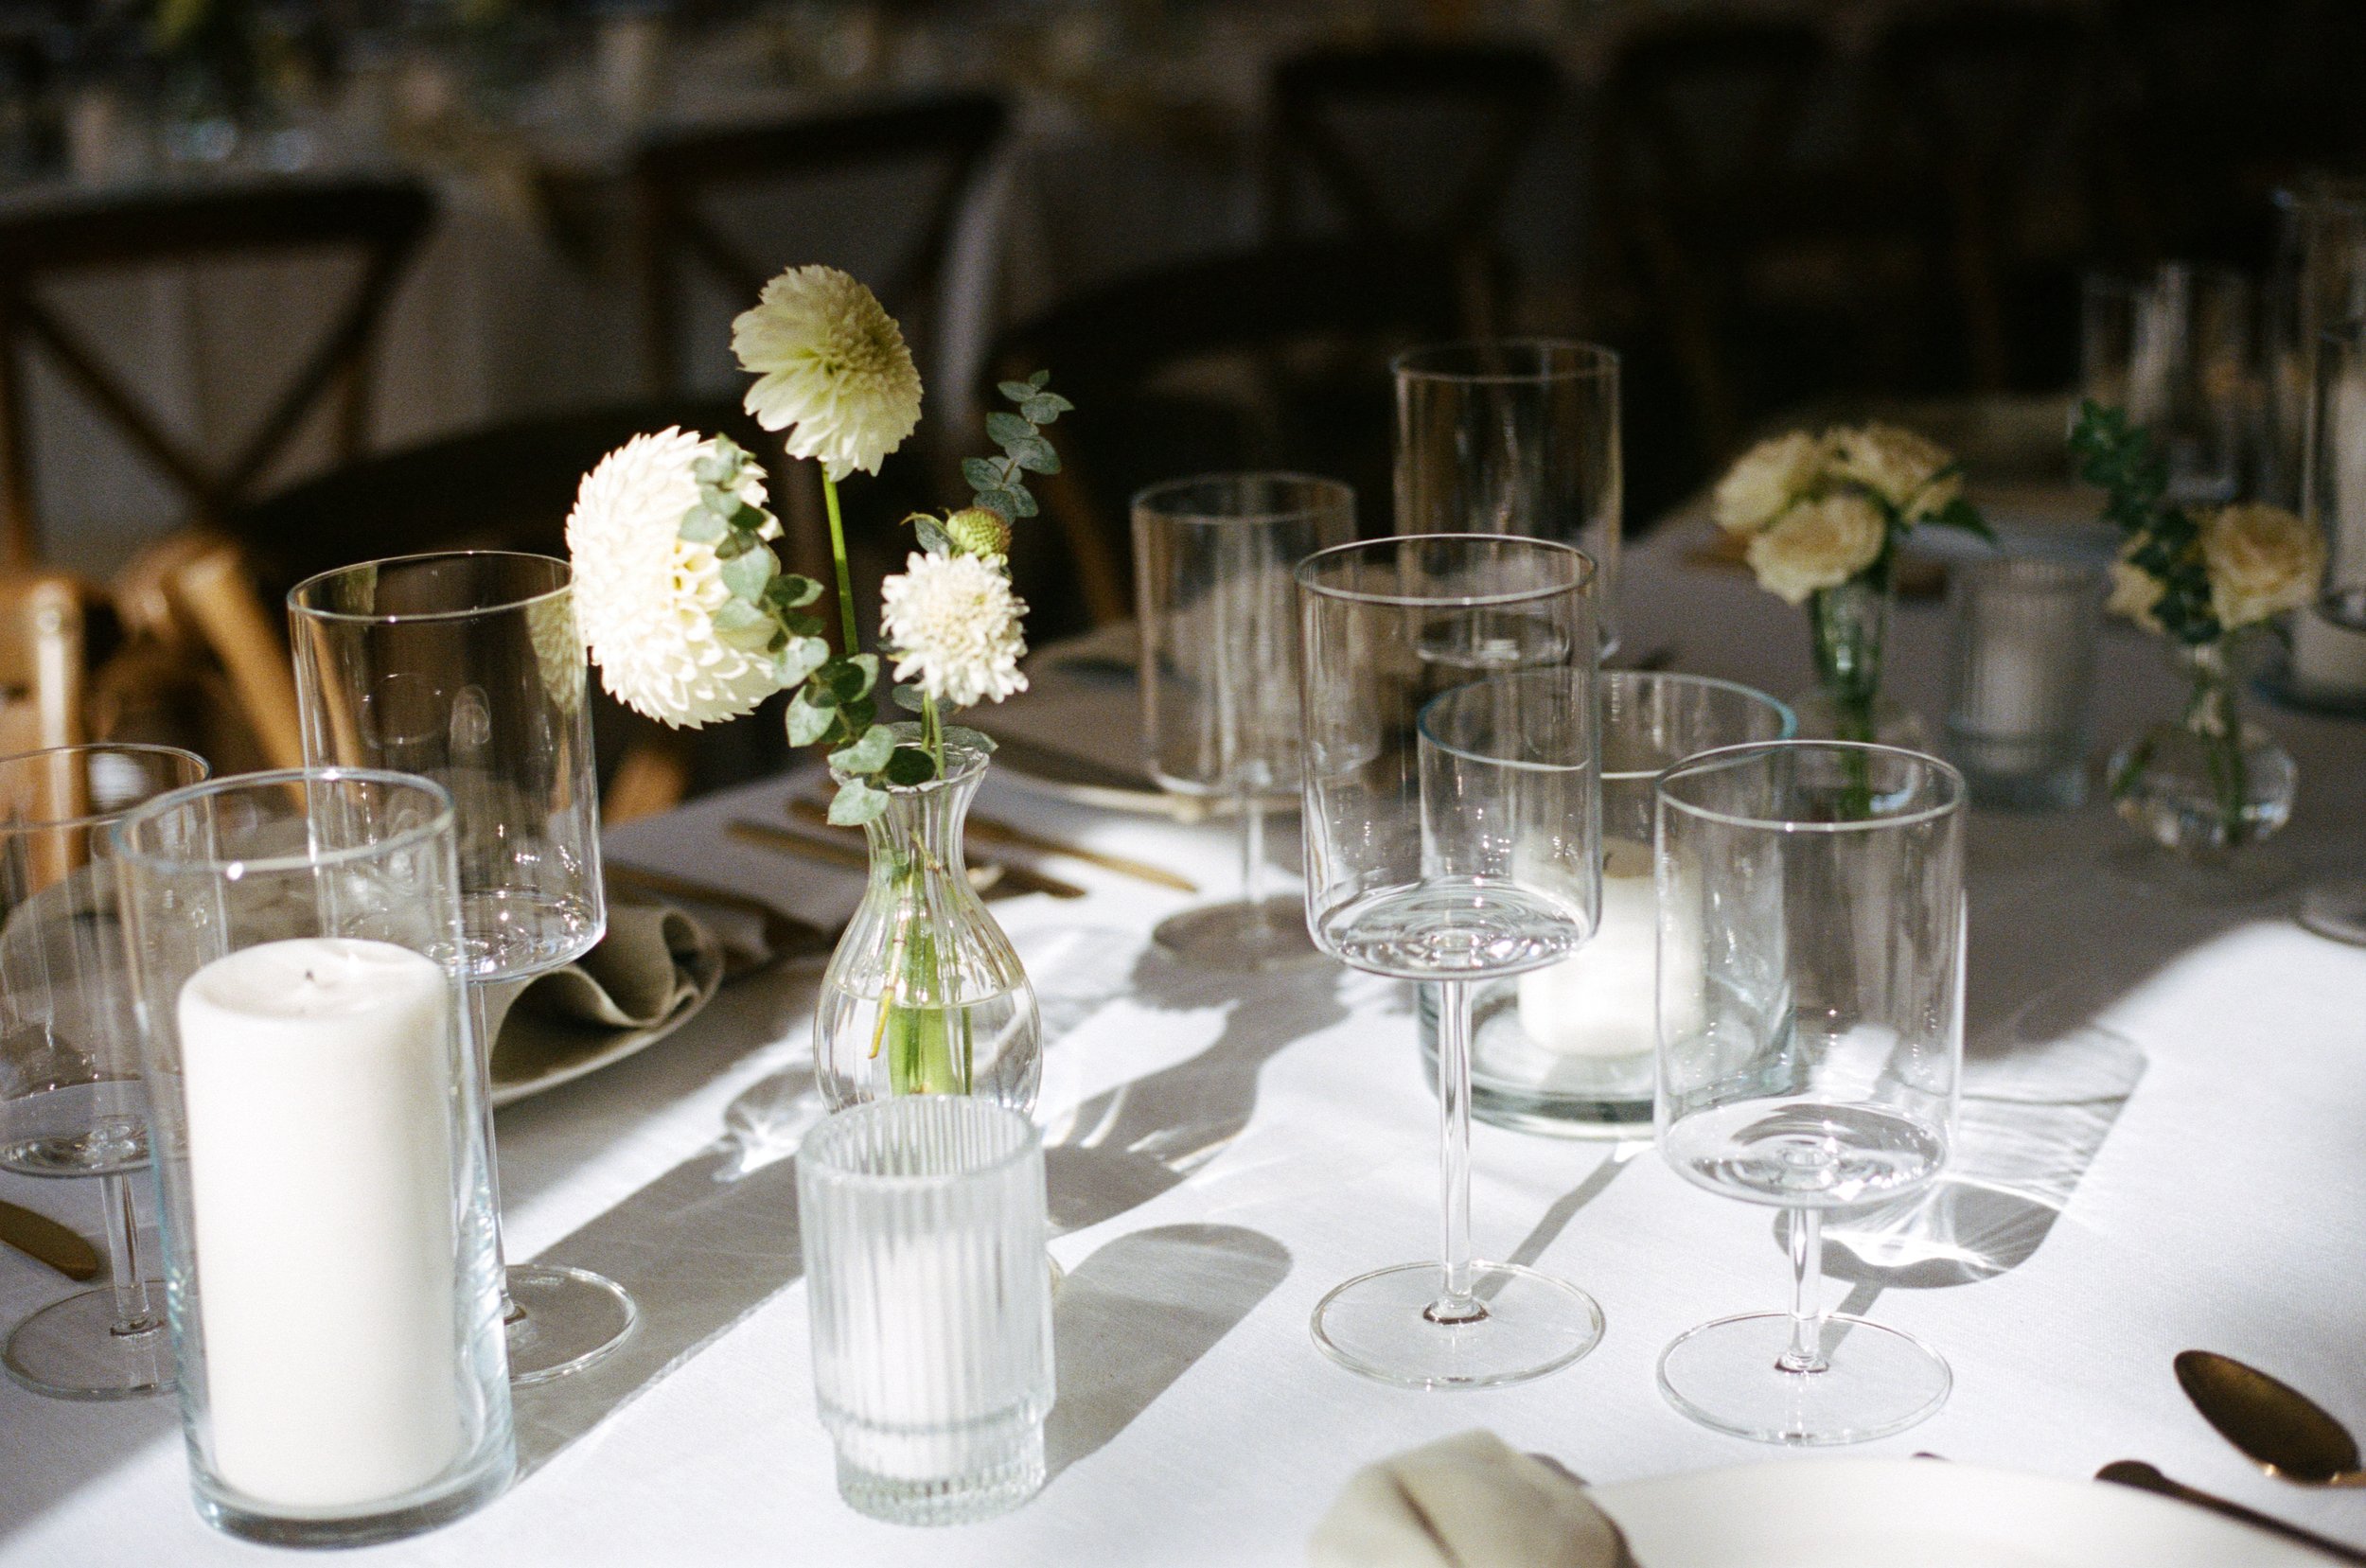 dahlia wedding flower centerpieces surrounded by wedding table decorations. Oregon coast wedding film photography